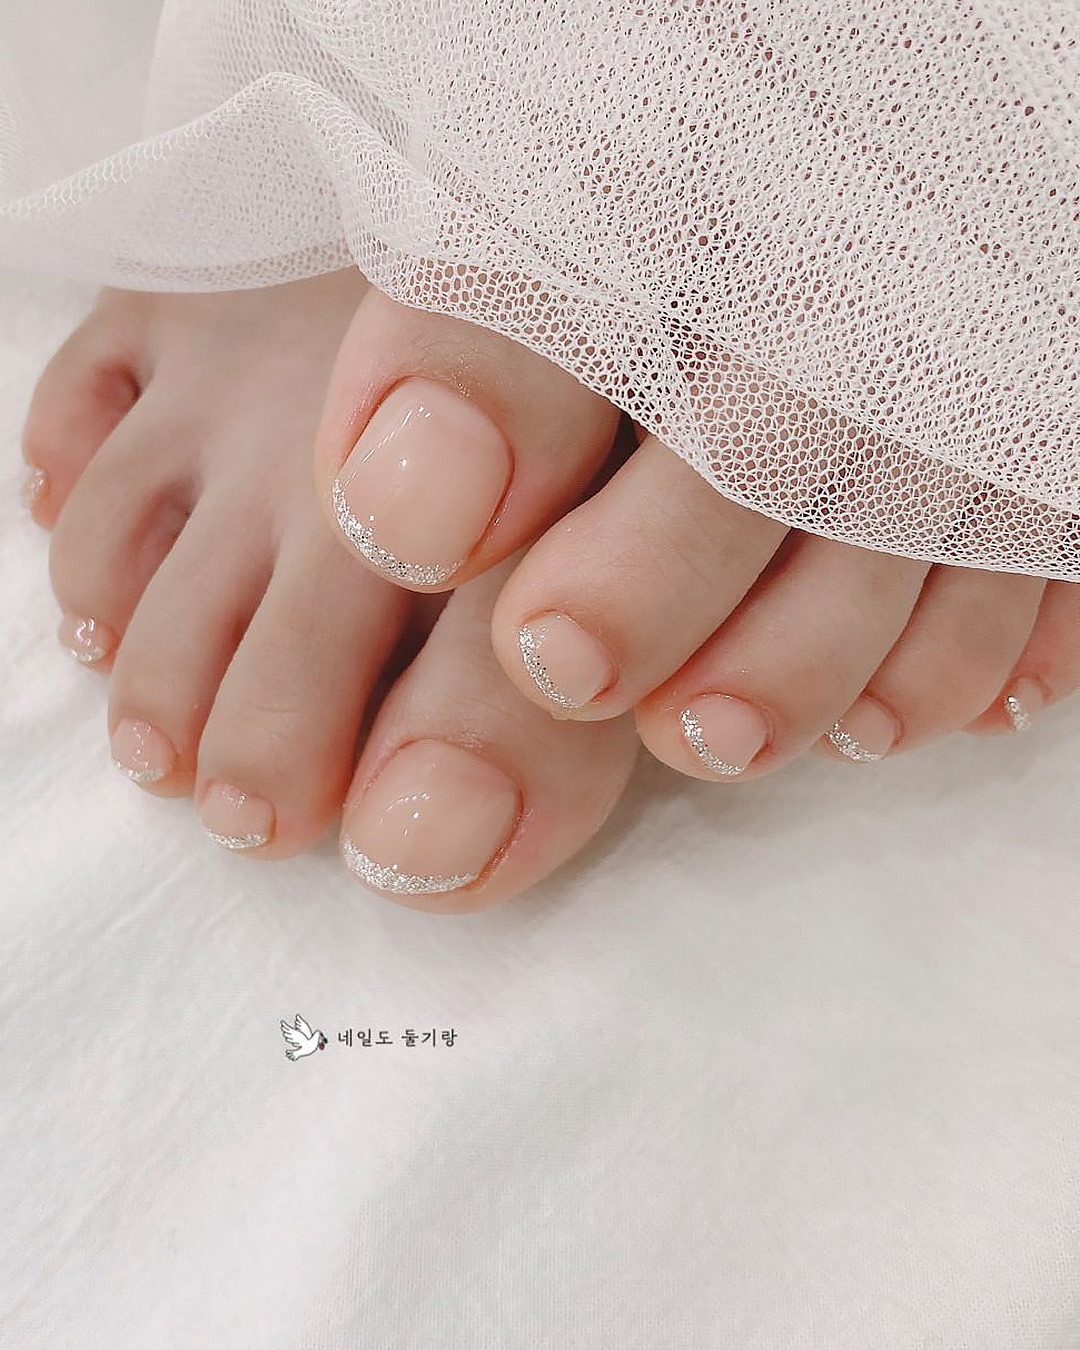 wedding toe nails french design with glitter doolginail